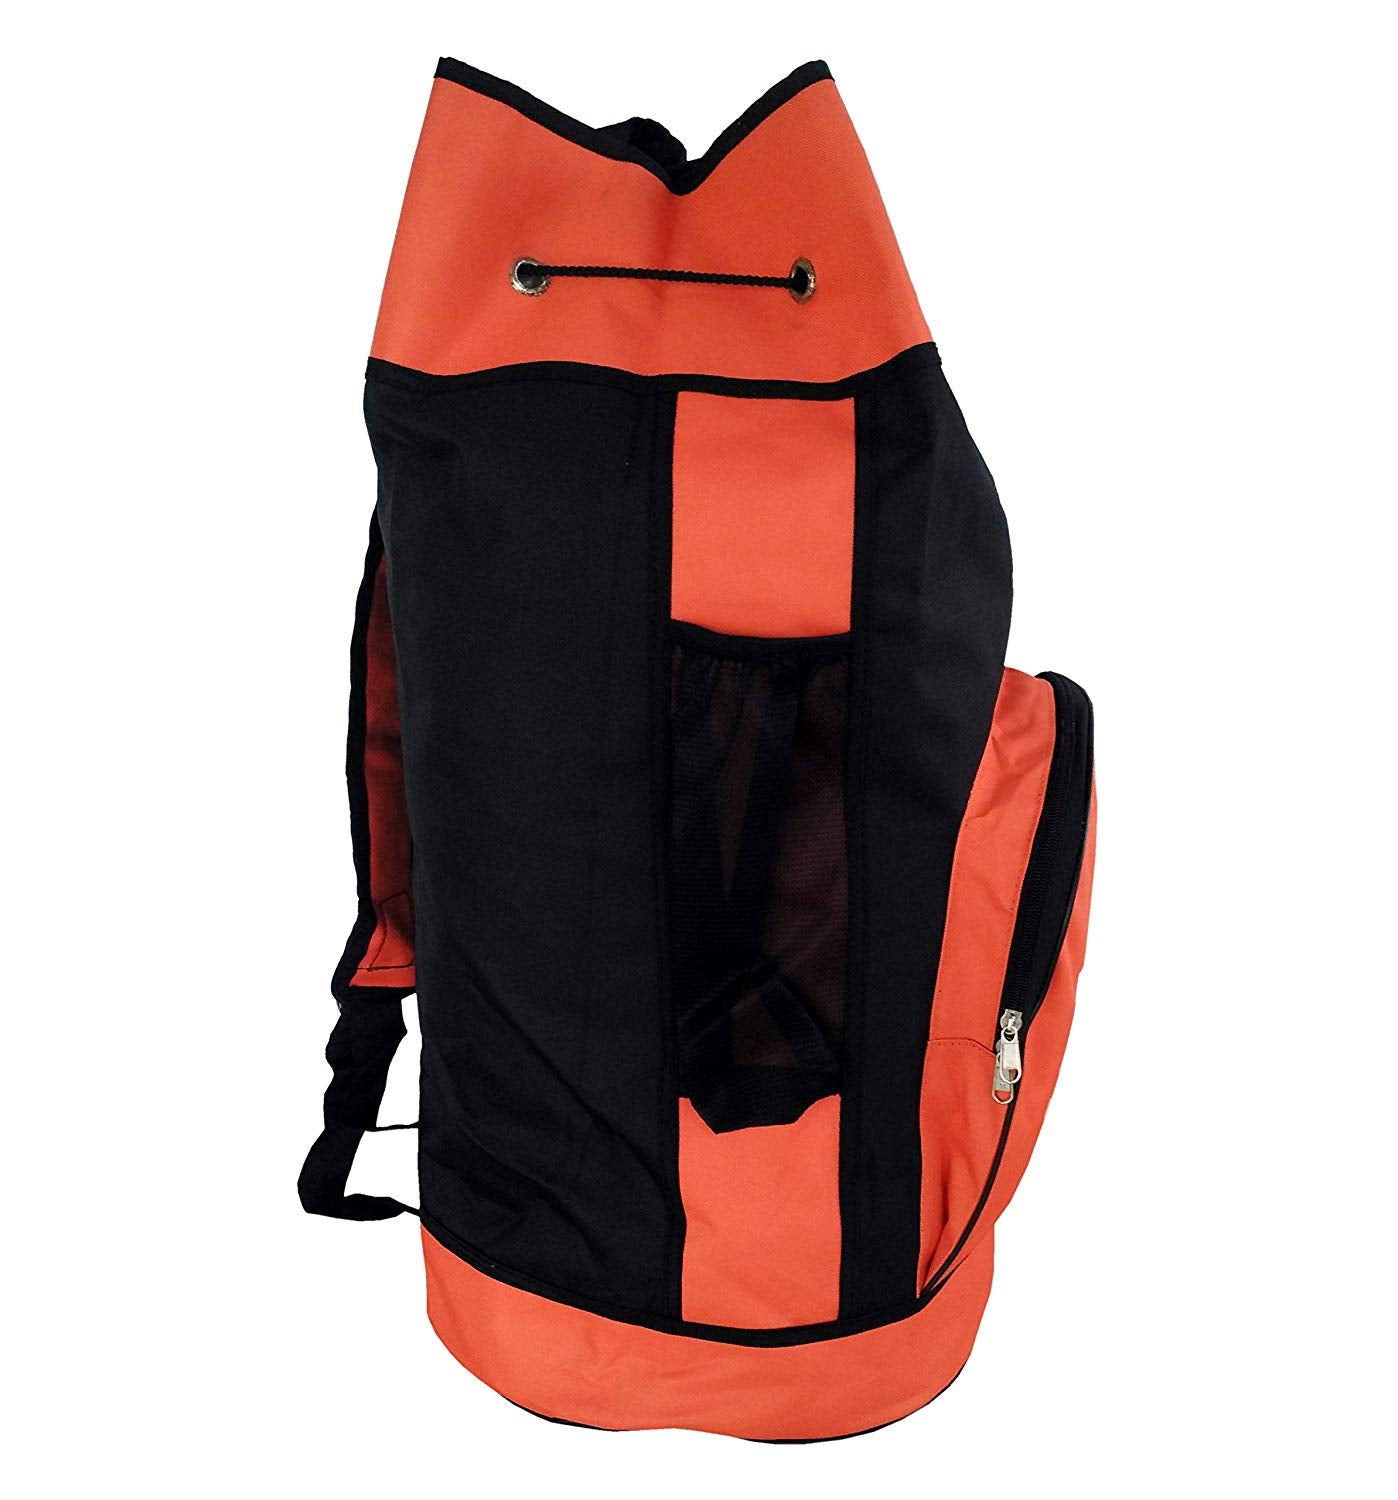 HRS Duffle Cricket Kit Bag - Best Price online Prokicksports.com